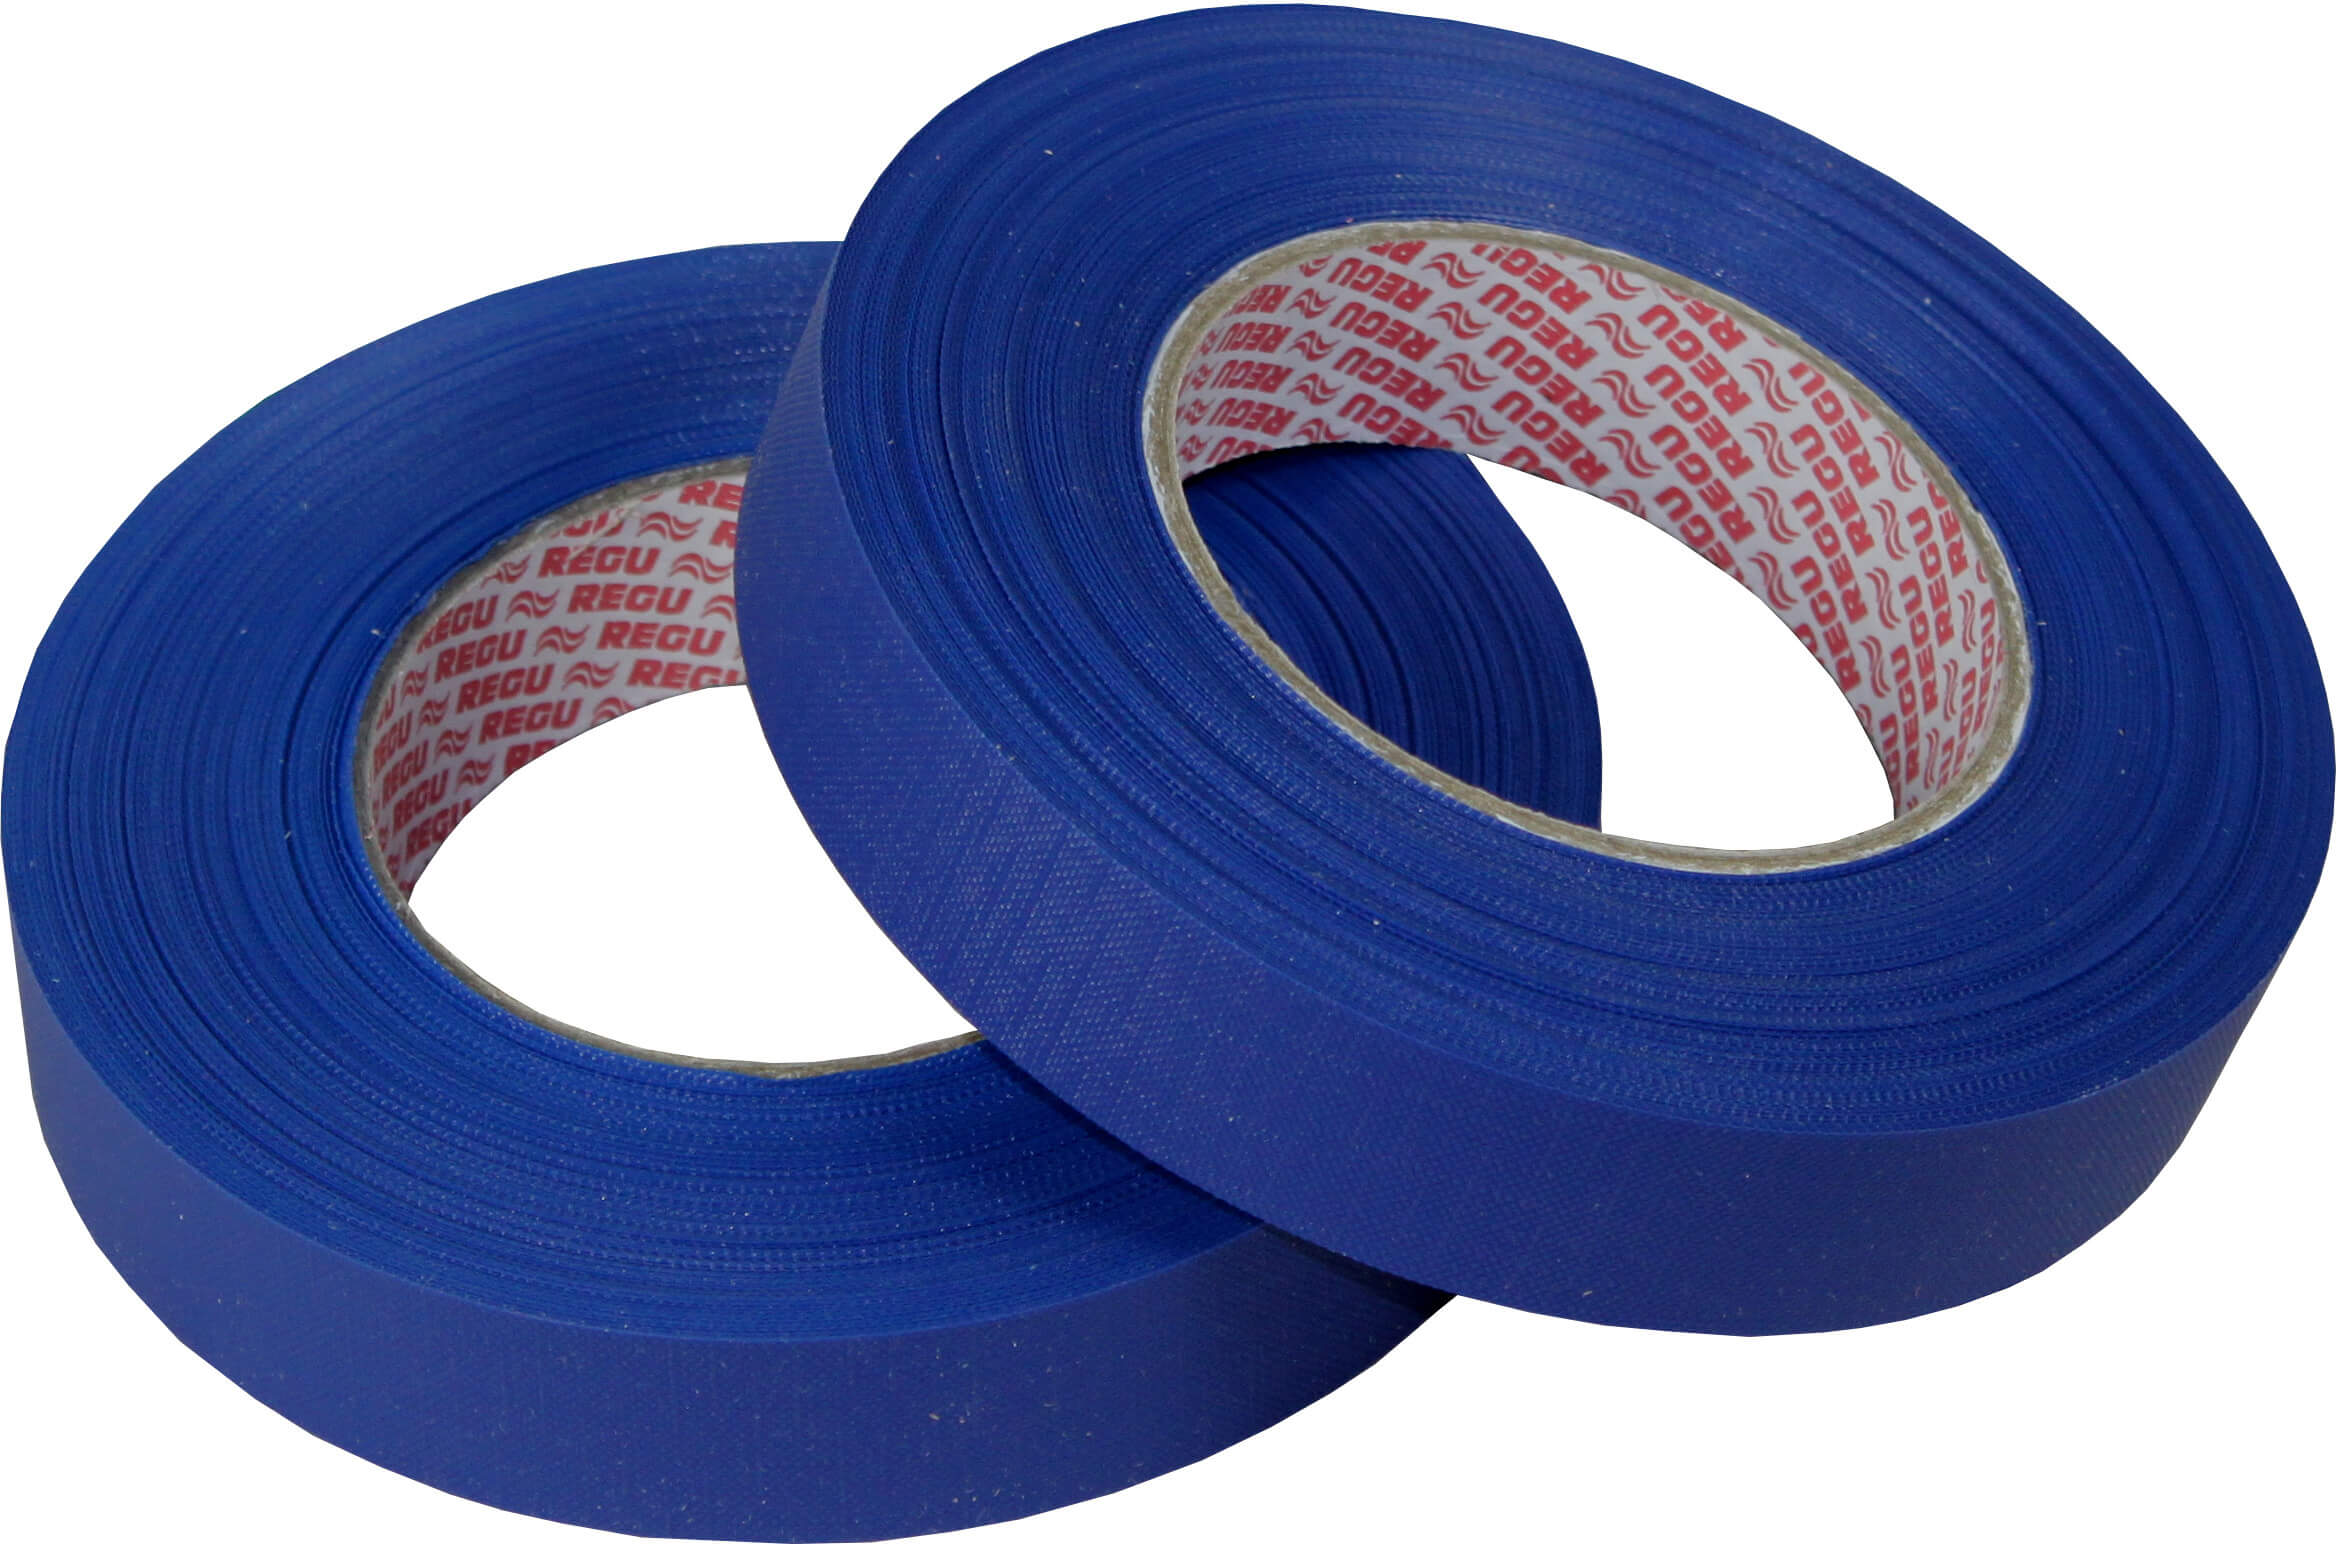 Blaues Regudux RX hochwertiges Kunststoffband, 25mm x 50m | Bestnr. REGUDUXR25-BL